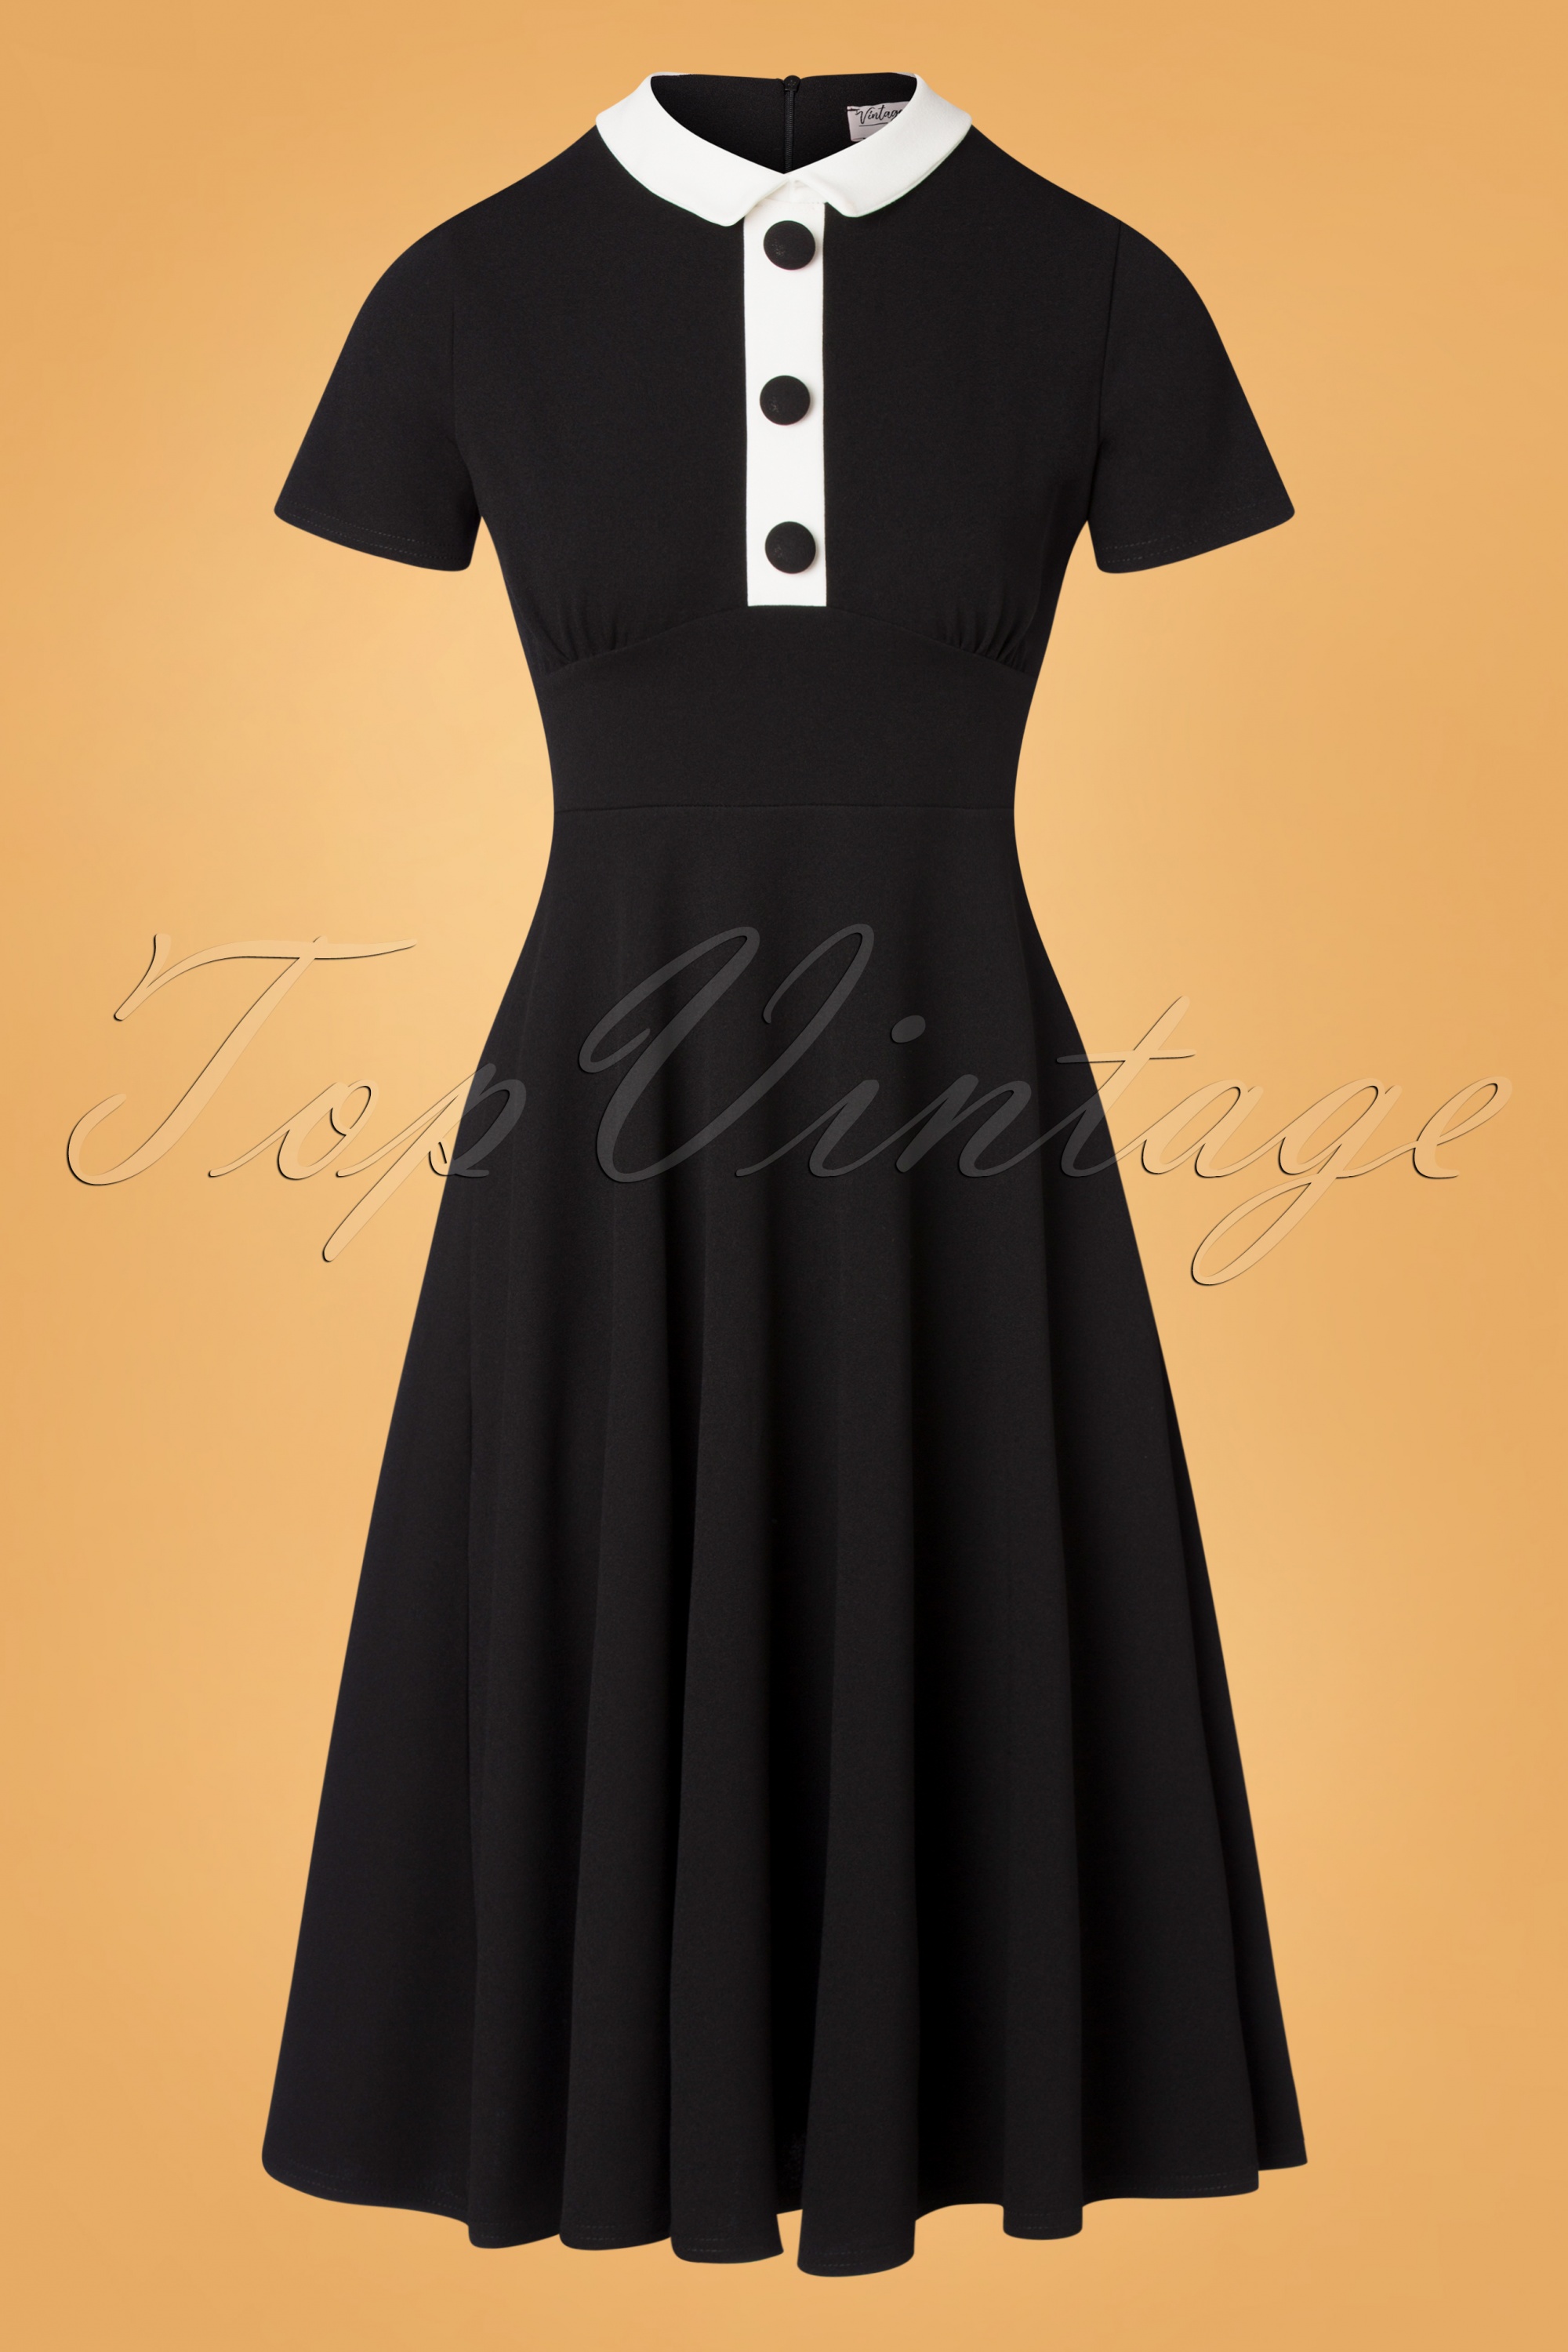 Vintage Chic for Topvintage - Sandy swing jurk in zwart en wit